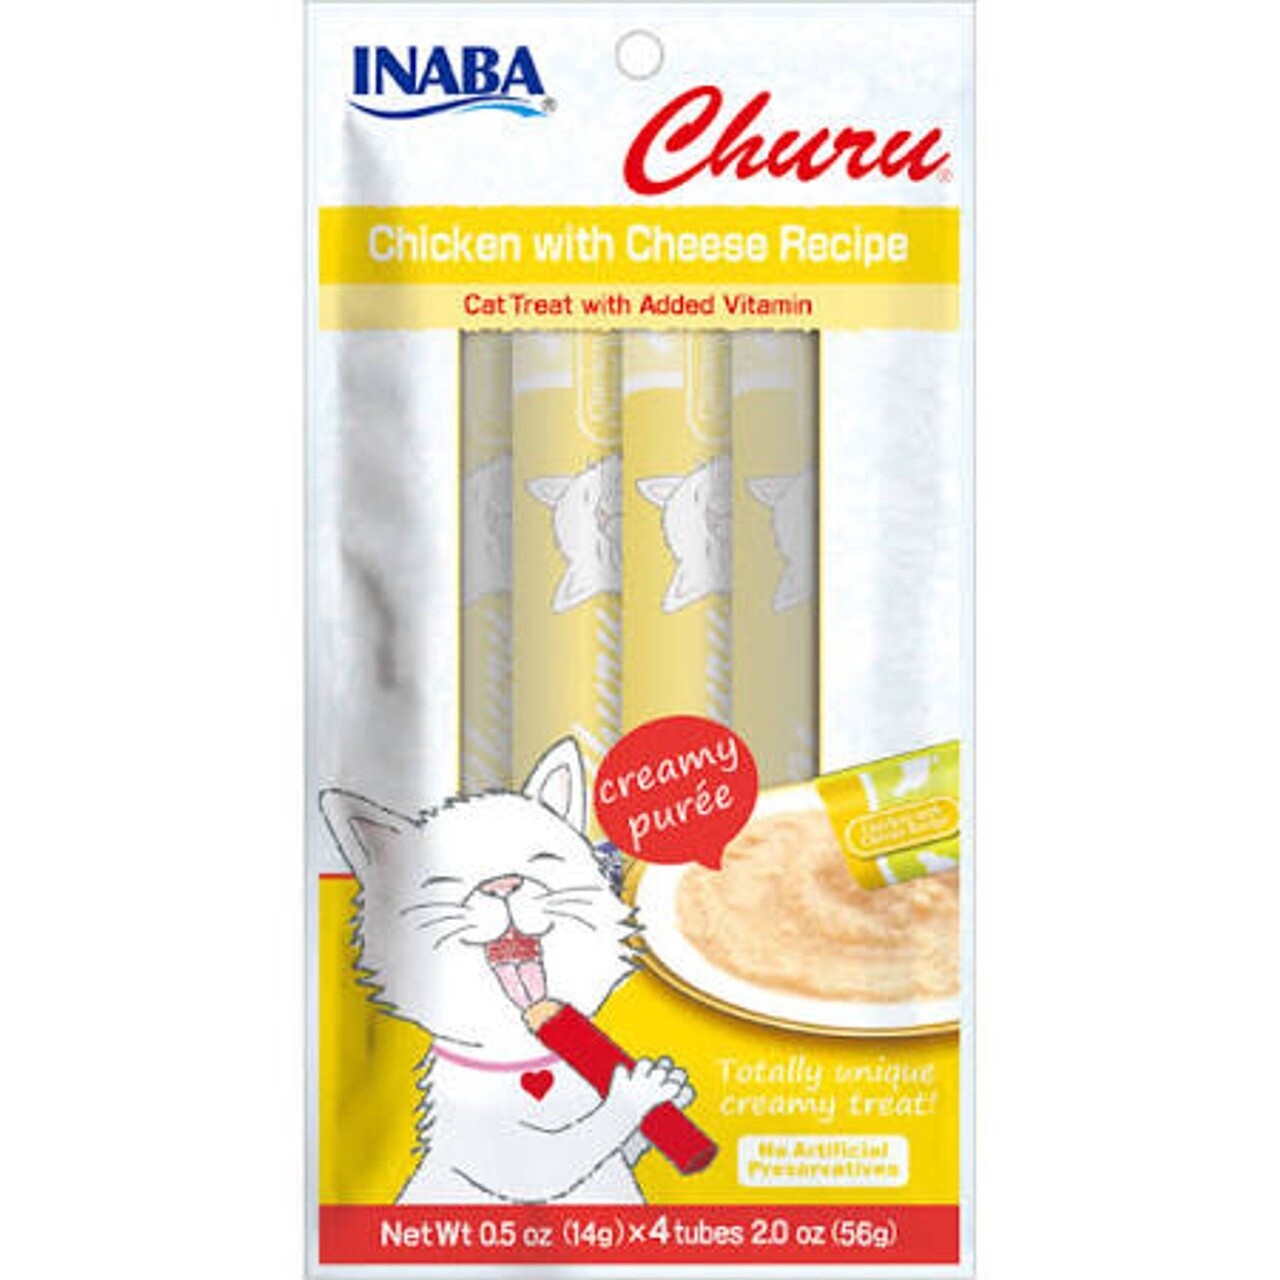 - Churu Creamy Chicken with Cheese